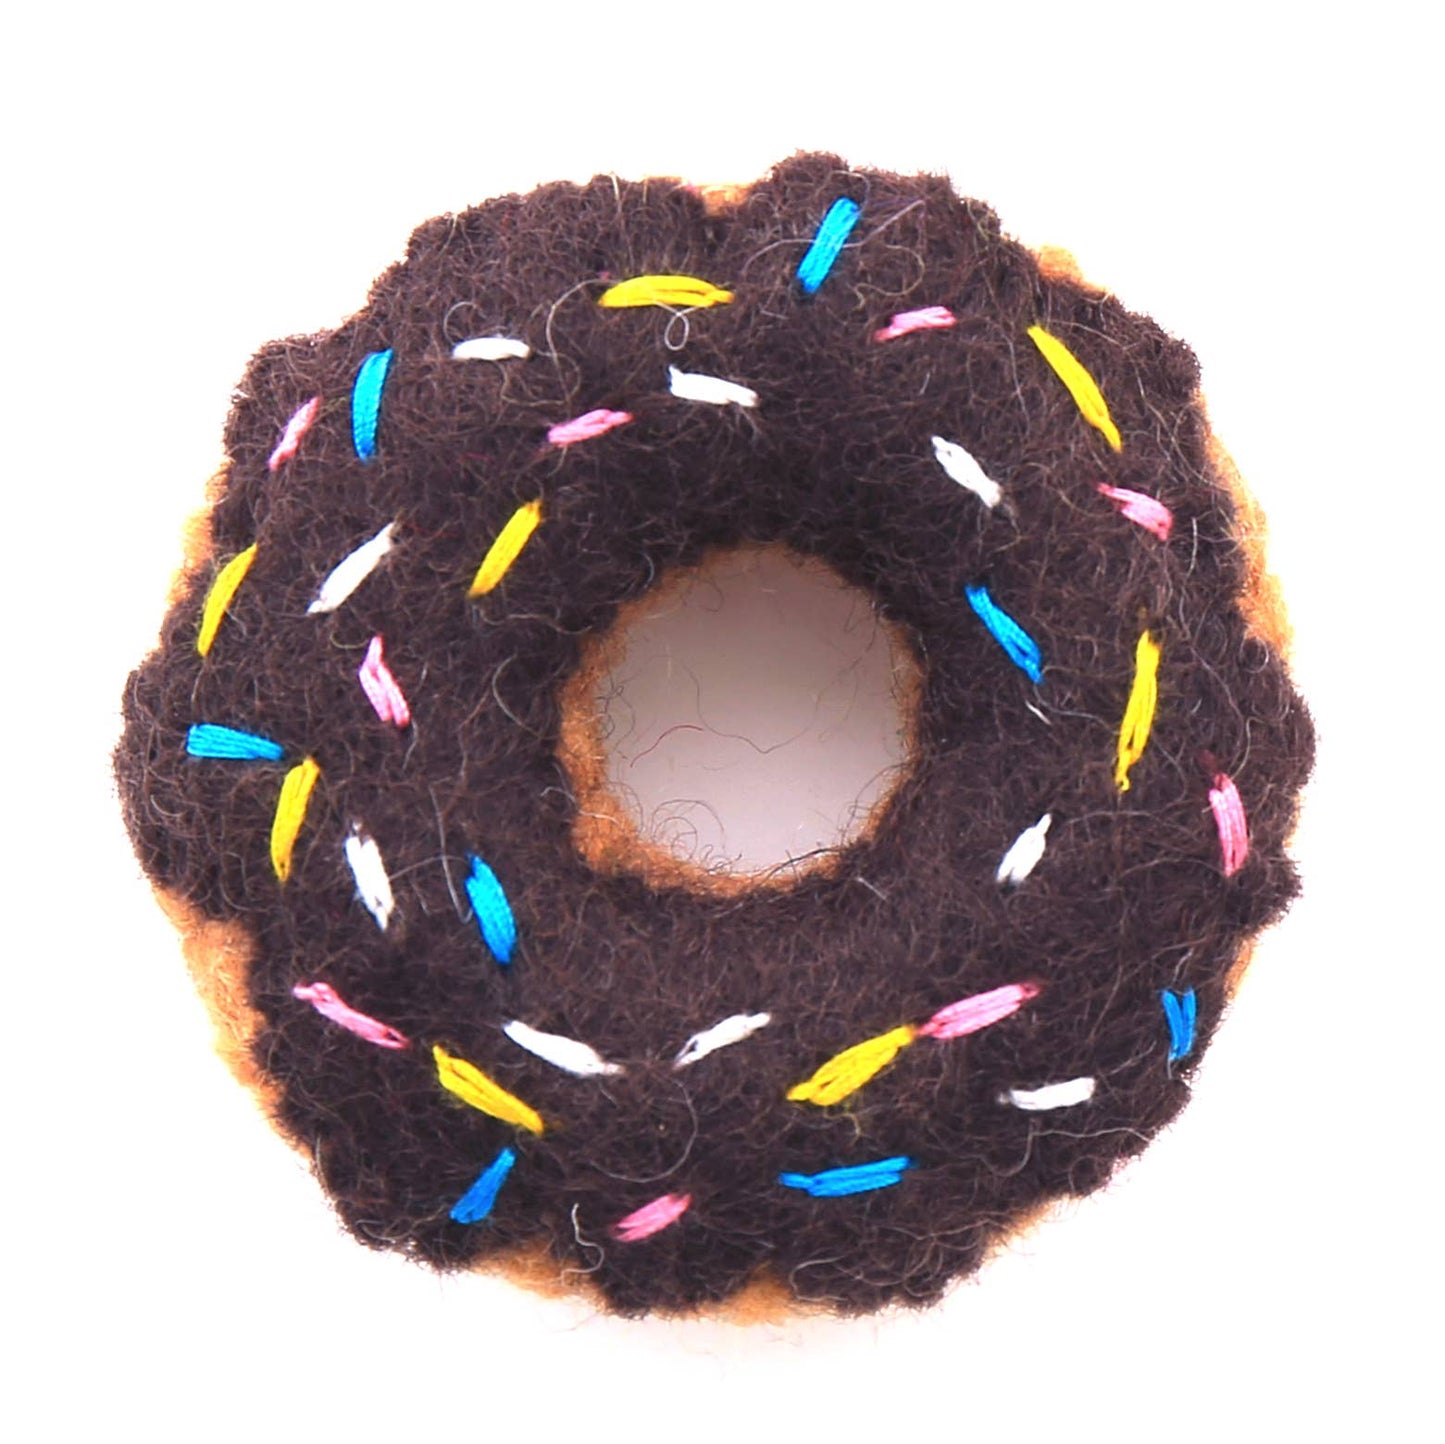 Chocolate Donut Cat Toy: 3.25" diameter